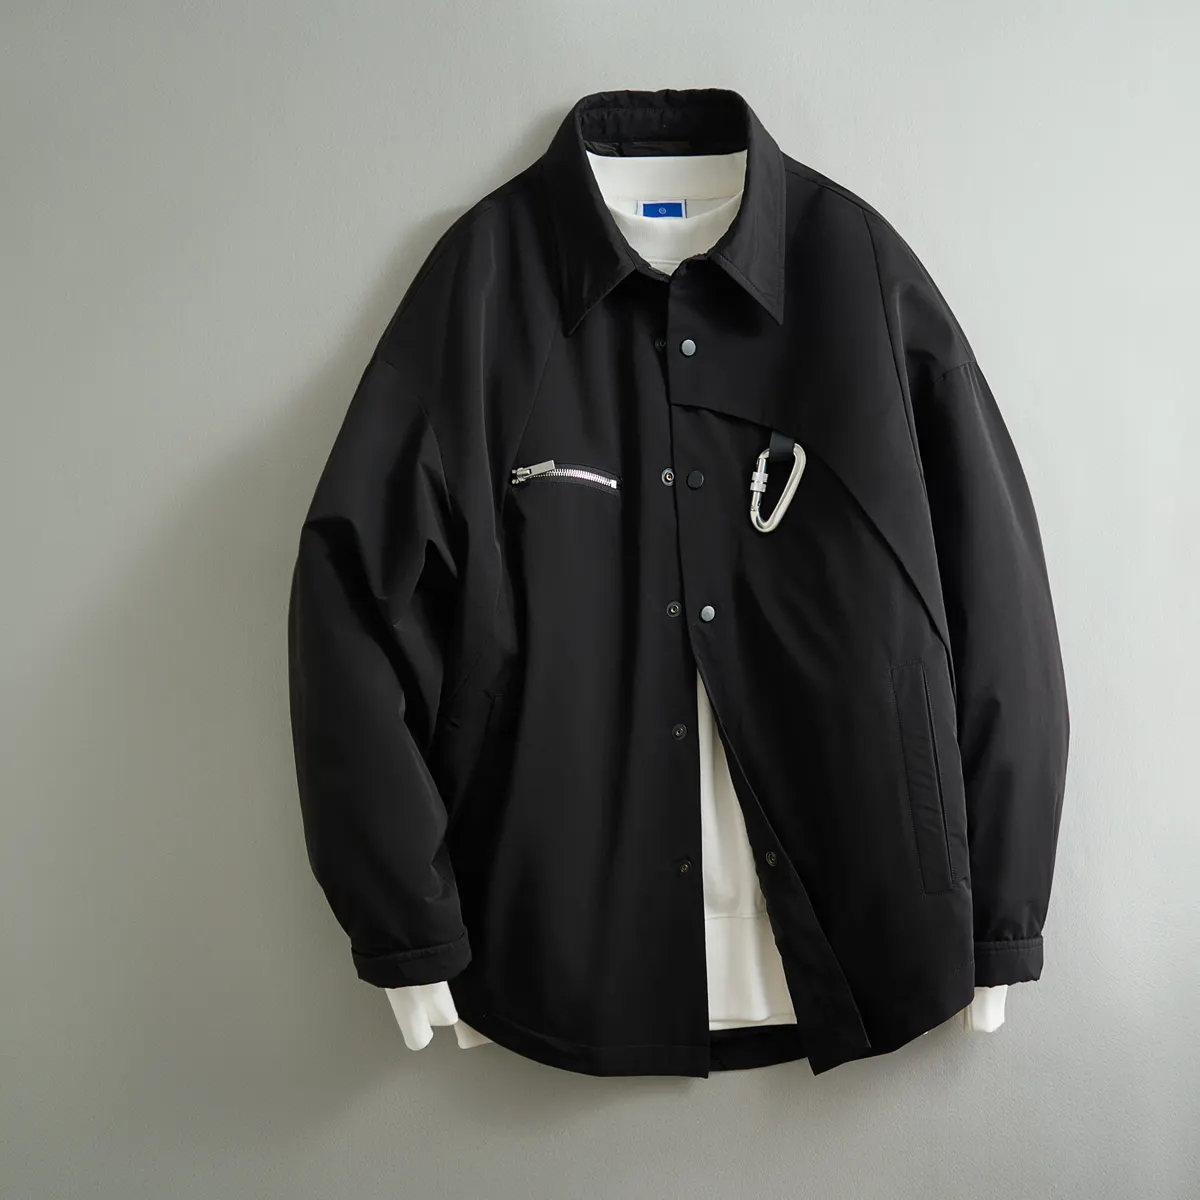 OEM Custom Design leggero giacche invernali imbottite da uomo piumino impermeabile caldo piumino per uomo bomber jacket